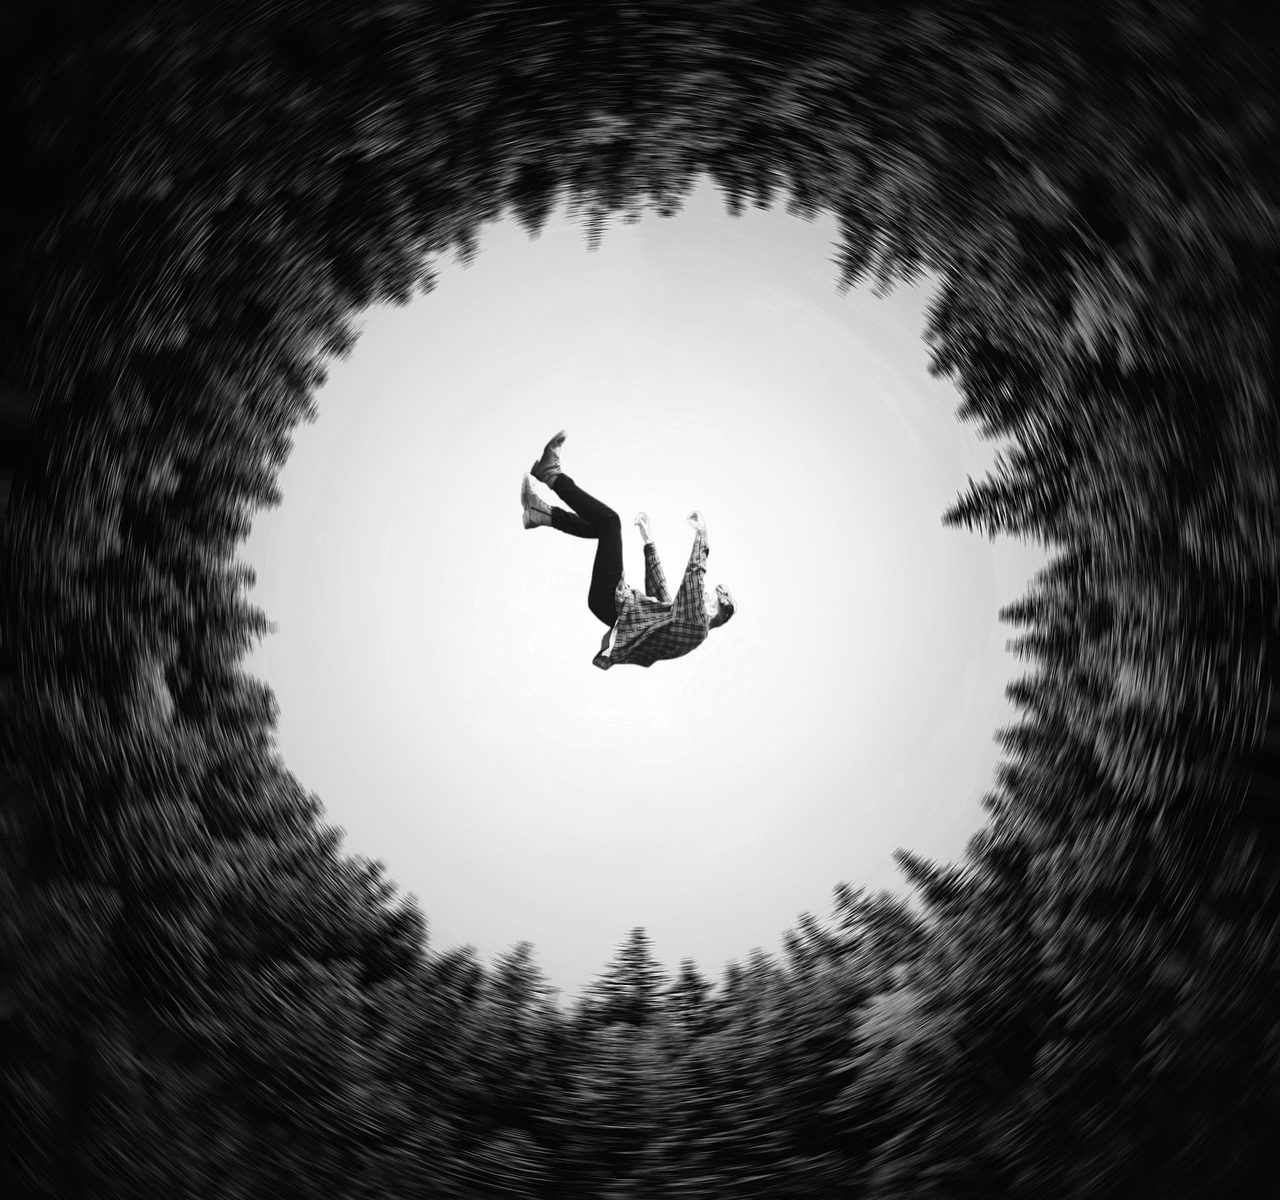 Looking up at a man falling into a circle of trees.